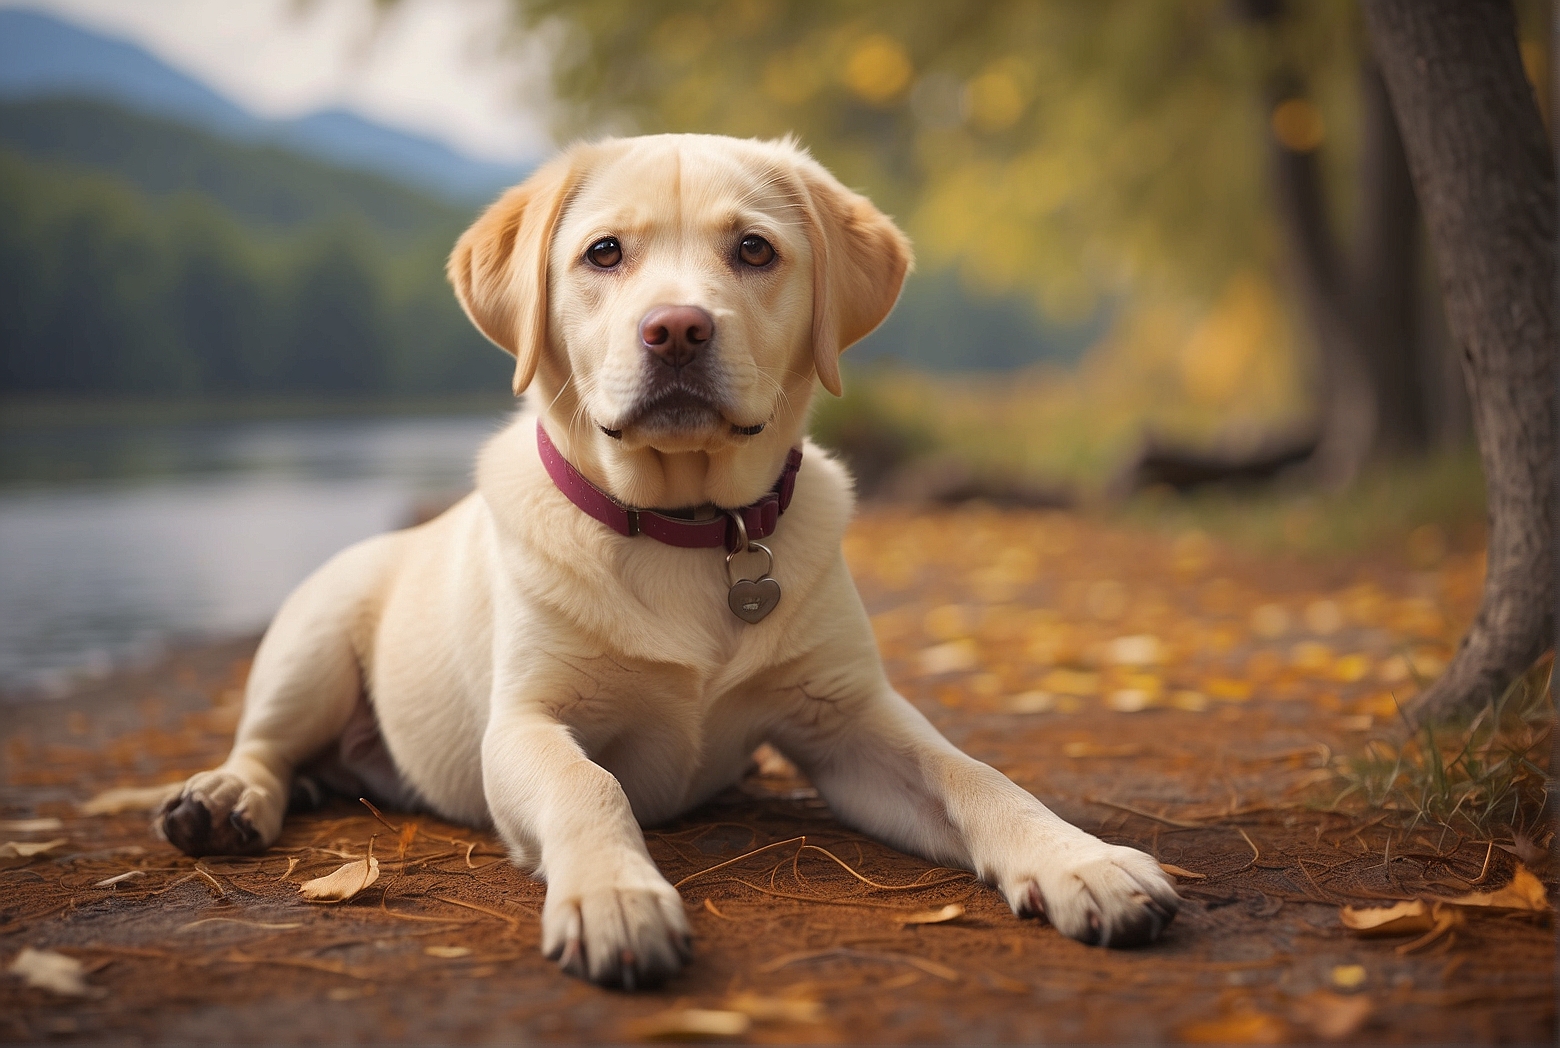 How Much Does a Labrador Retriever Cost?